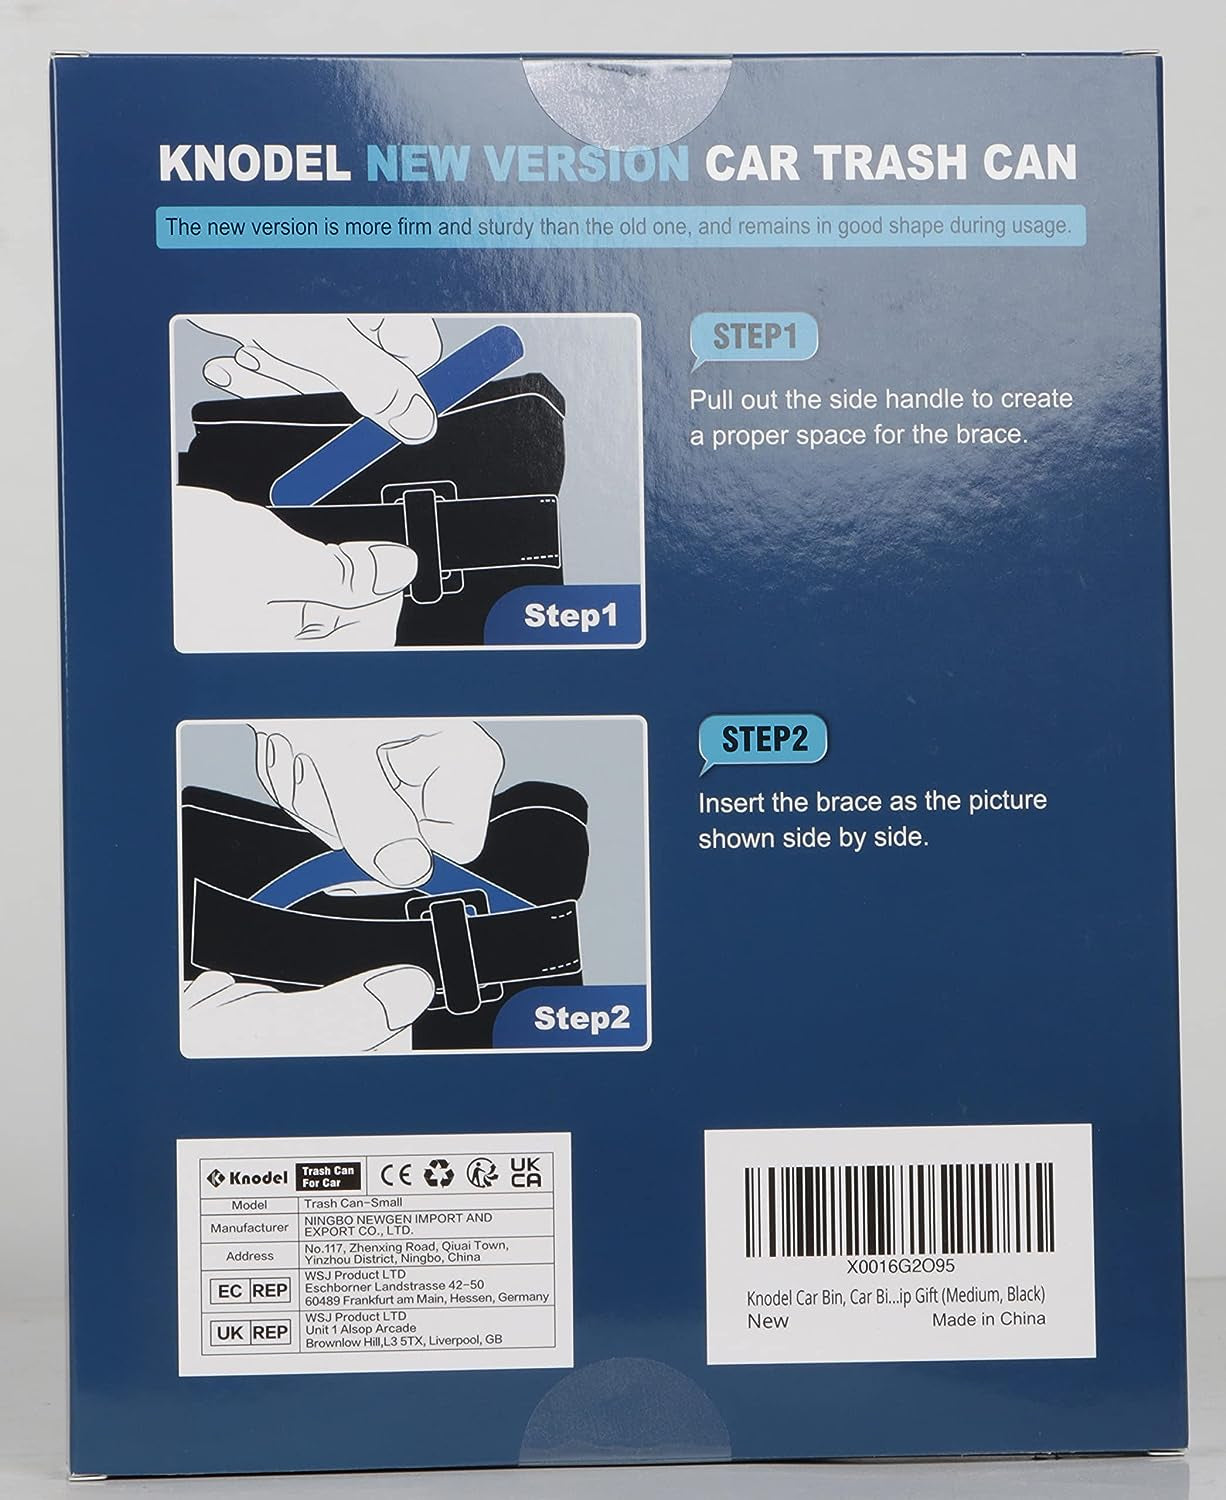 Car Trash Can, Waterproof Garbage Can/Bag with Lid, 600D Leak-Proof Trash Bin, Car Trash Hanging (Medium, Black)